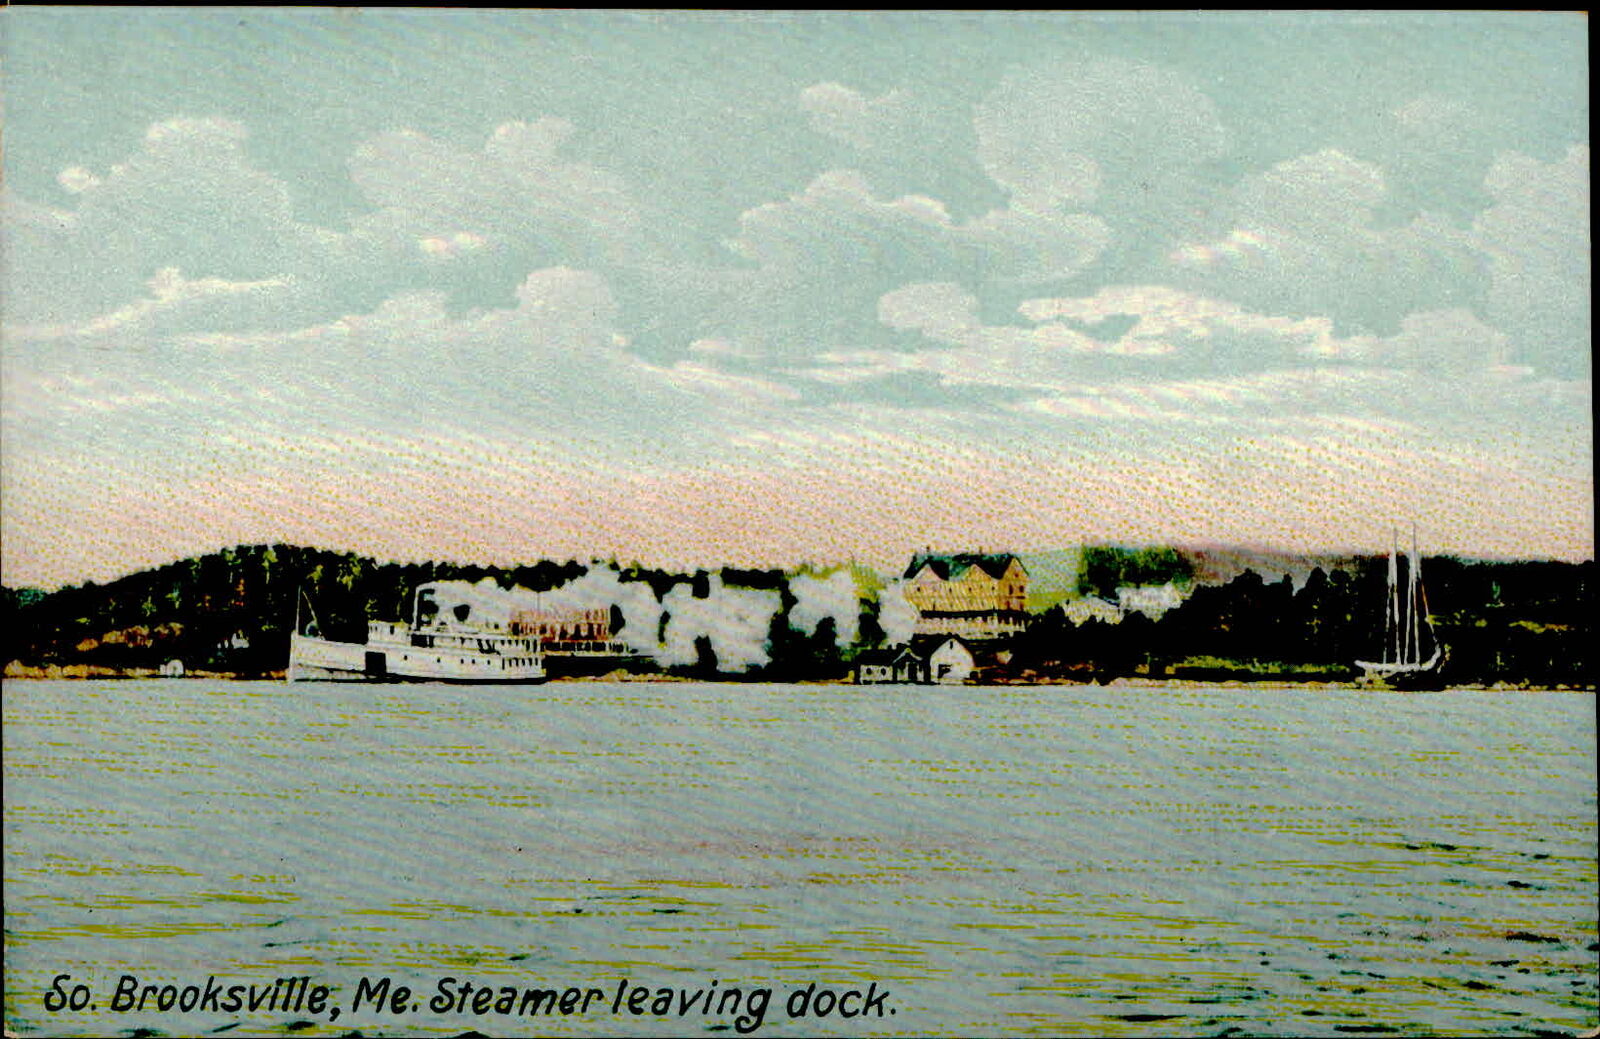 Postcard: So. Brooksville, Me. Steamer leaving dock.